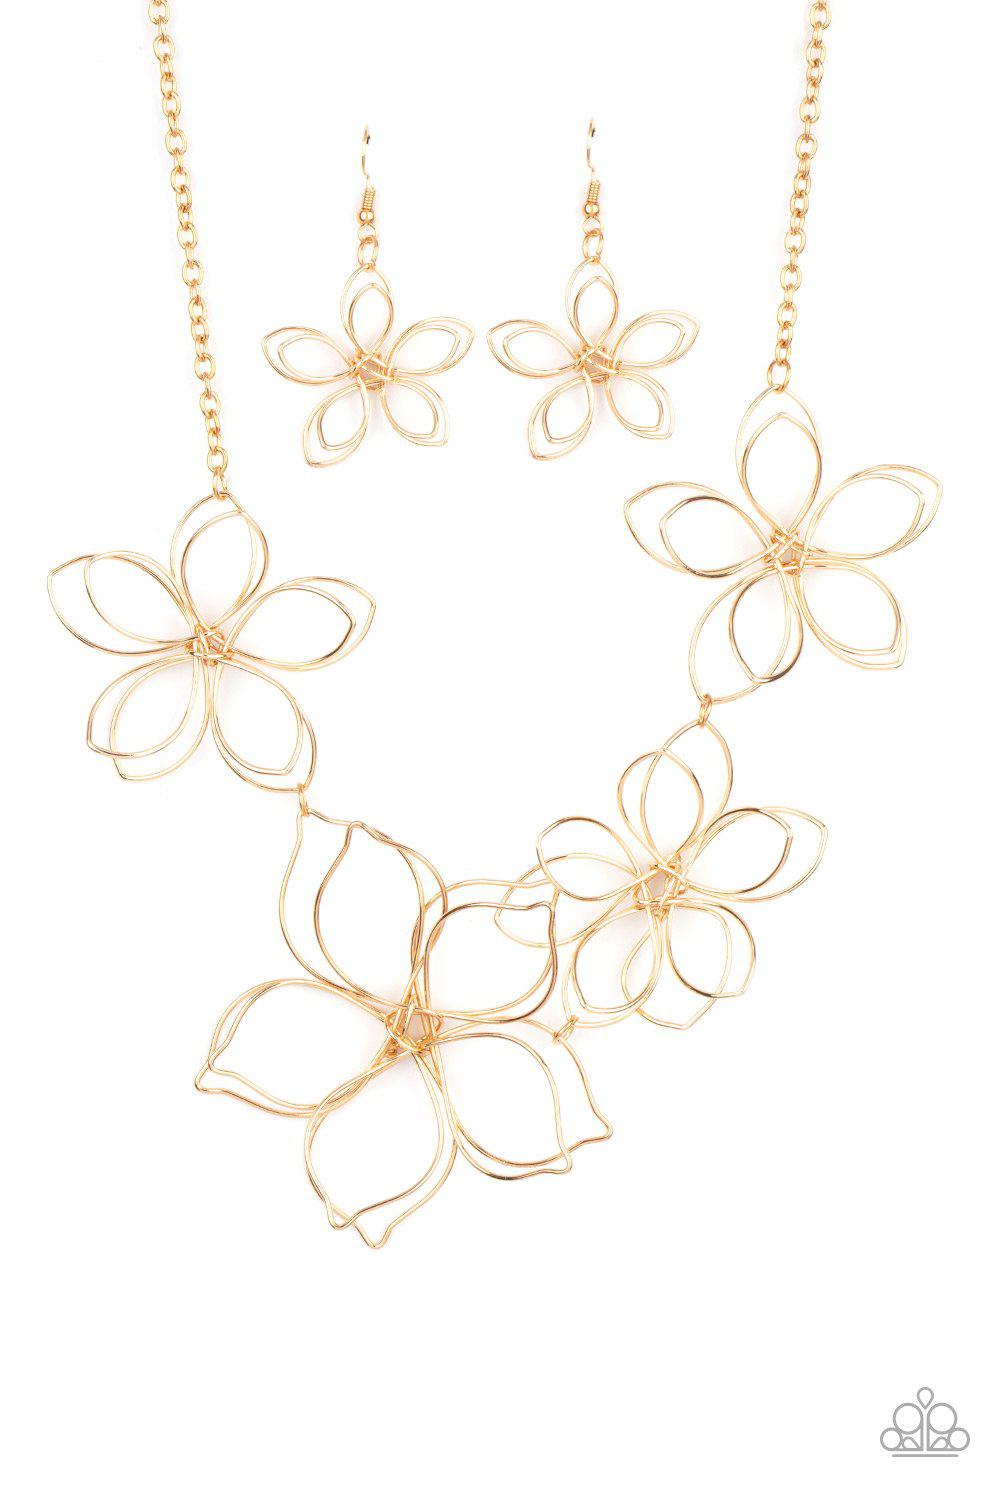 Flower Garden Fashionista Gold Wire Flower Necklace - Paparazzi Accessories- lightbox - CarasShop.com - $5 Jewelry by Cara Jewels